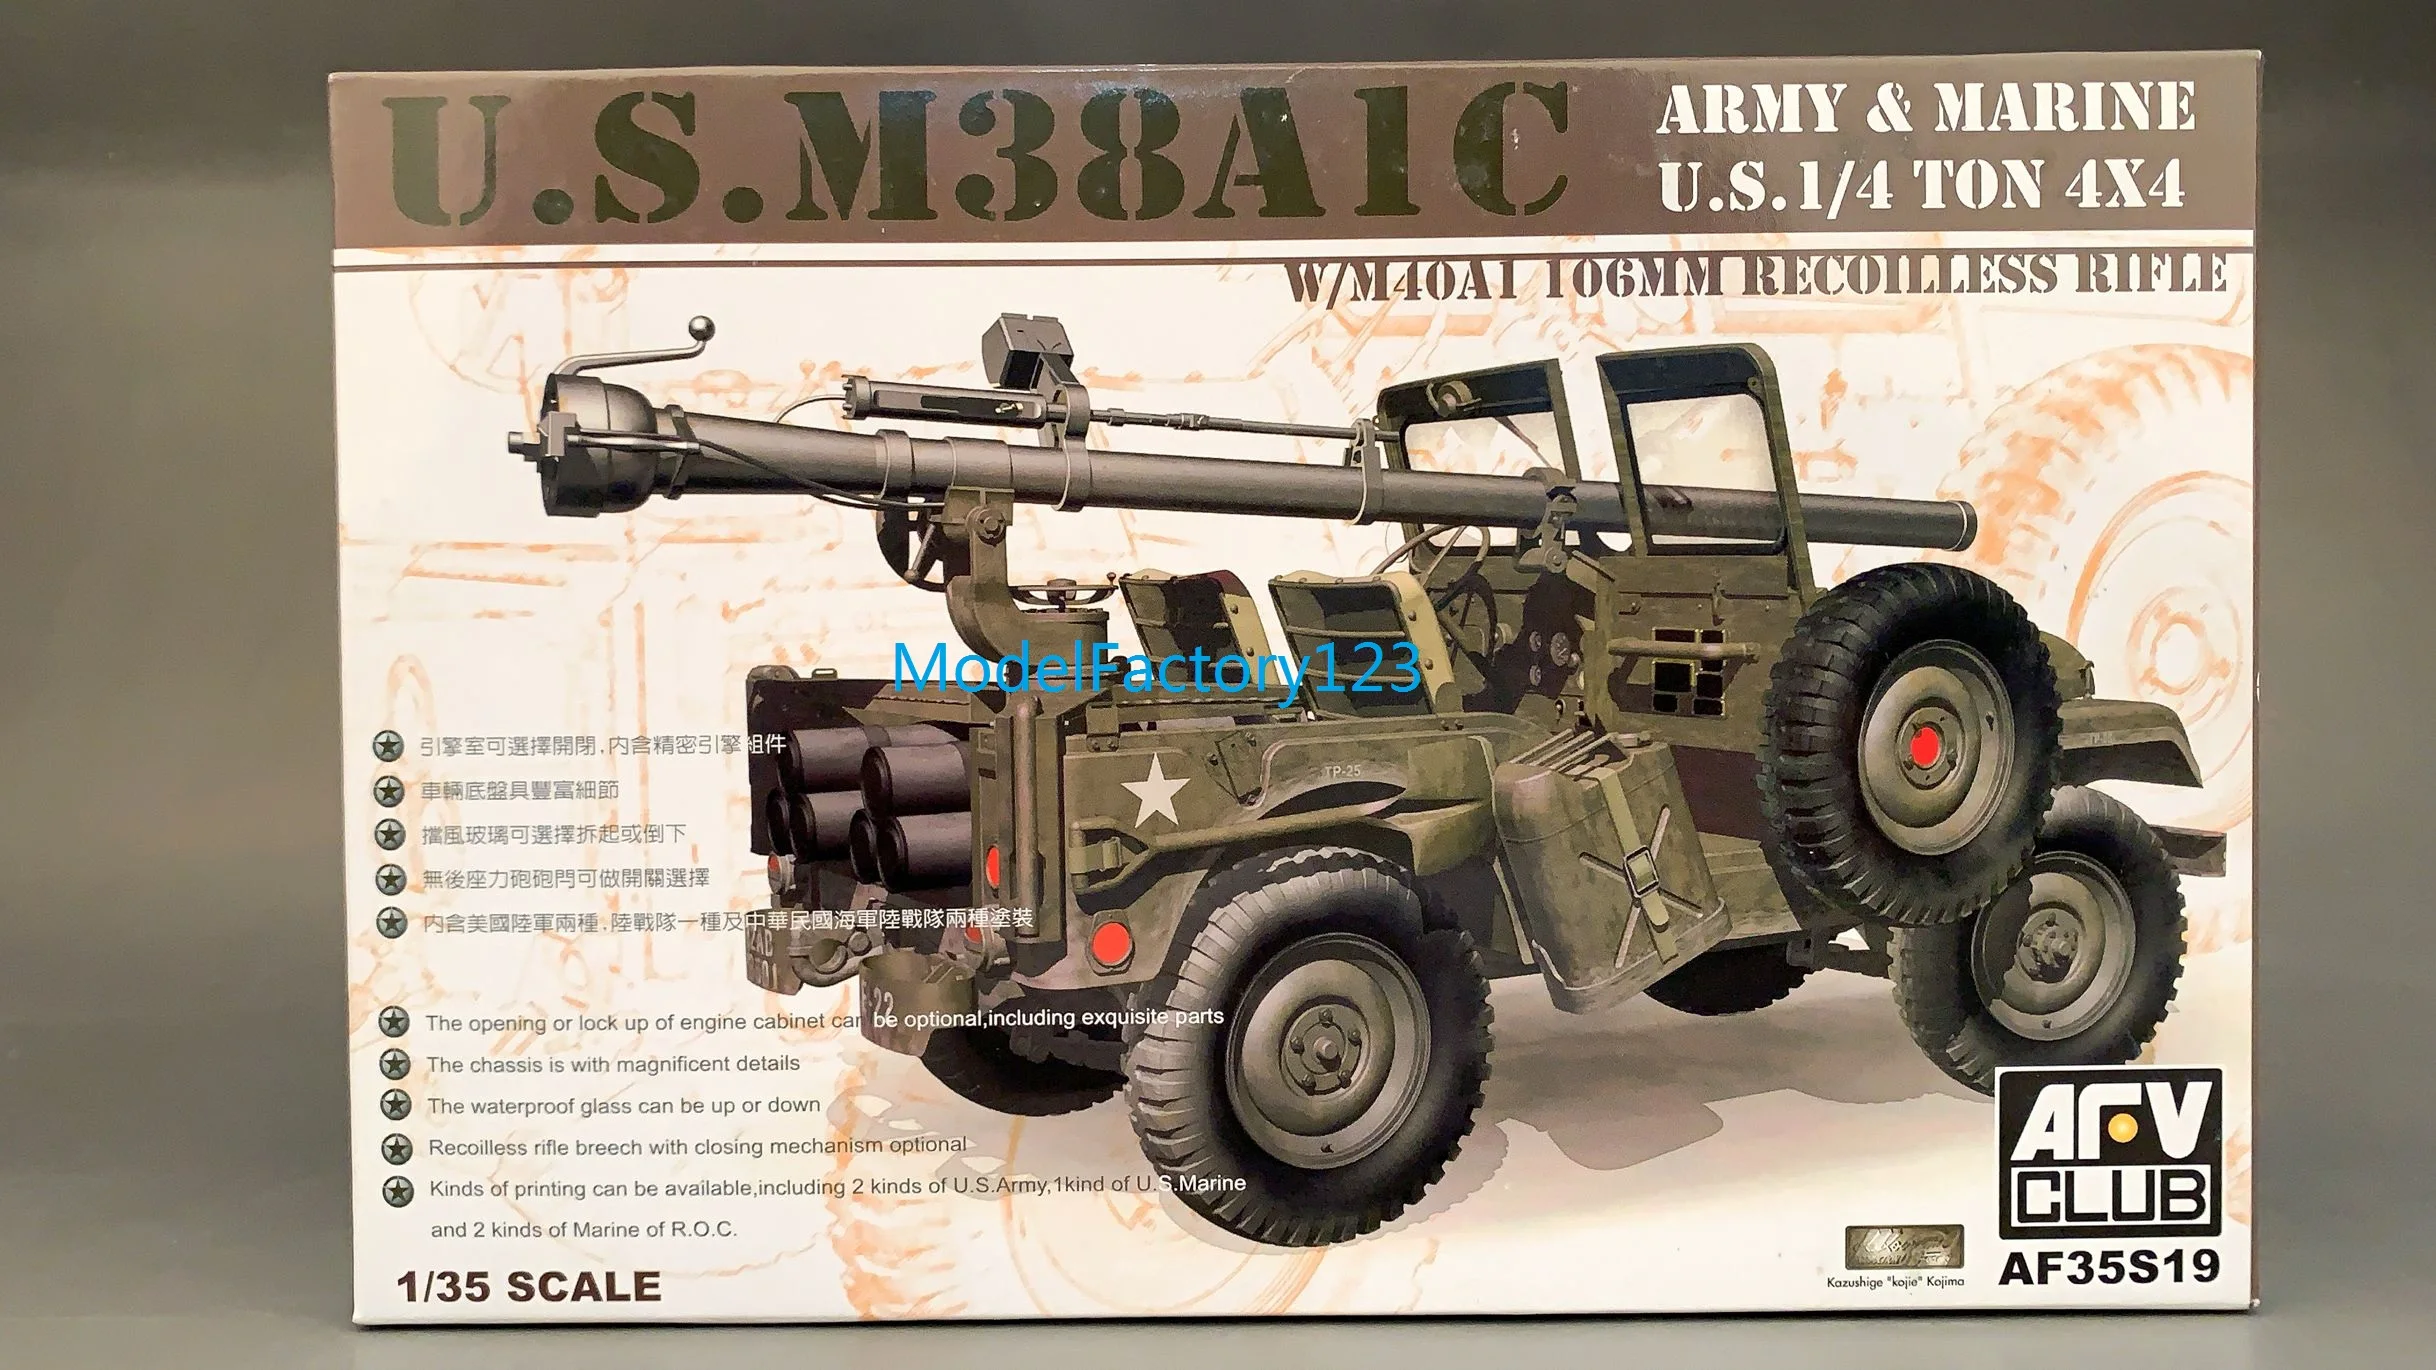 

AFV Club AF35S19 1/35 US M38A1C 1/4 Ton 4x4 w/M40A1 106mm Redoilless Rifle